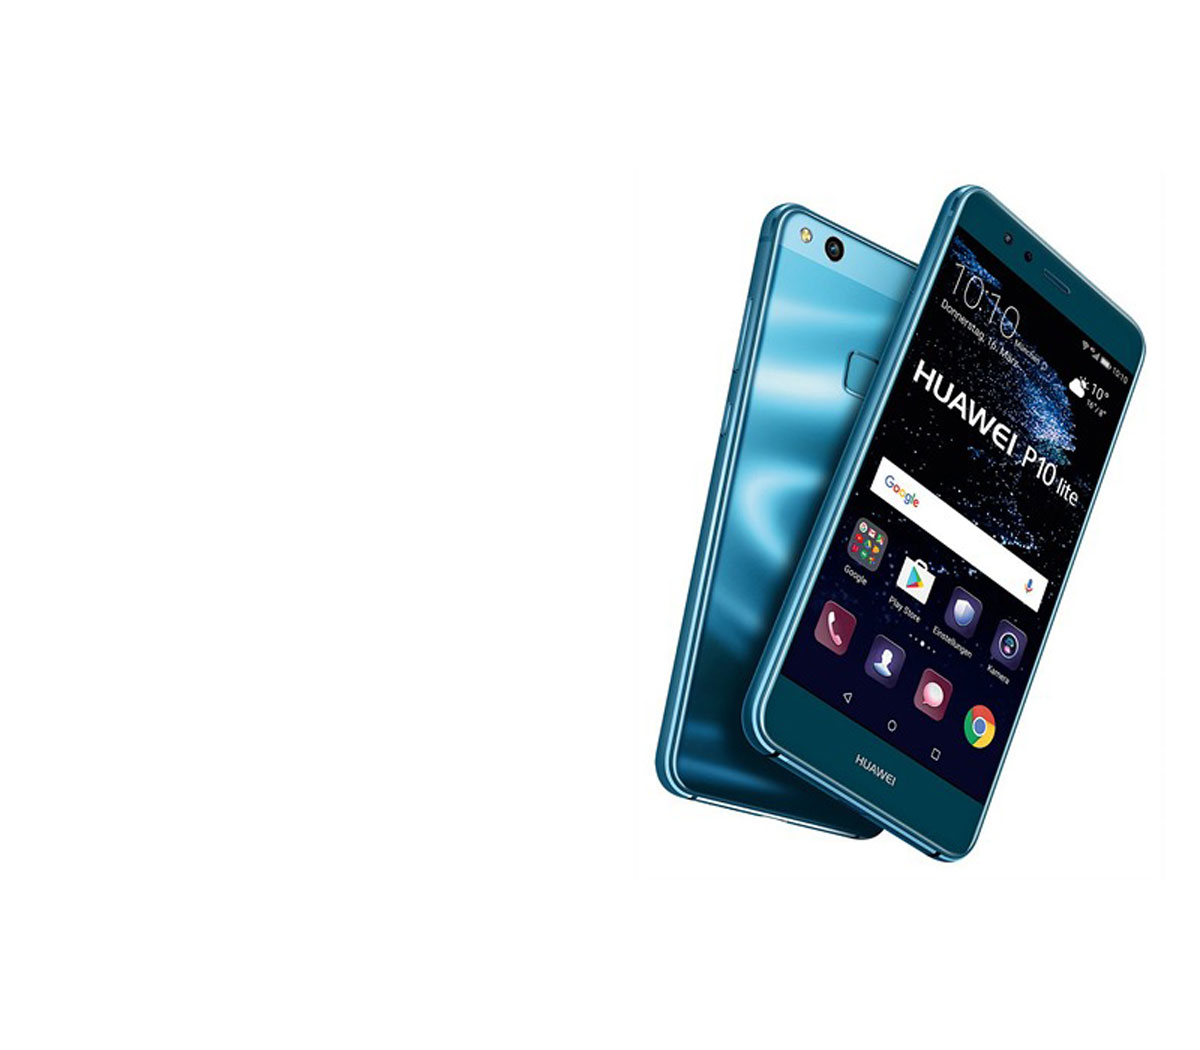 Huawei P10 Lite WAS-LX1 Dual Sim mobilní telefon, mobil, smartphone.